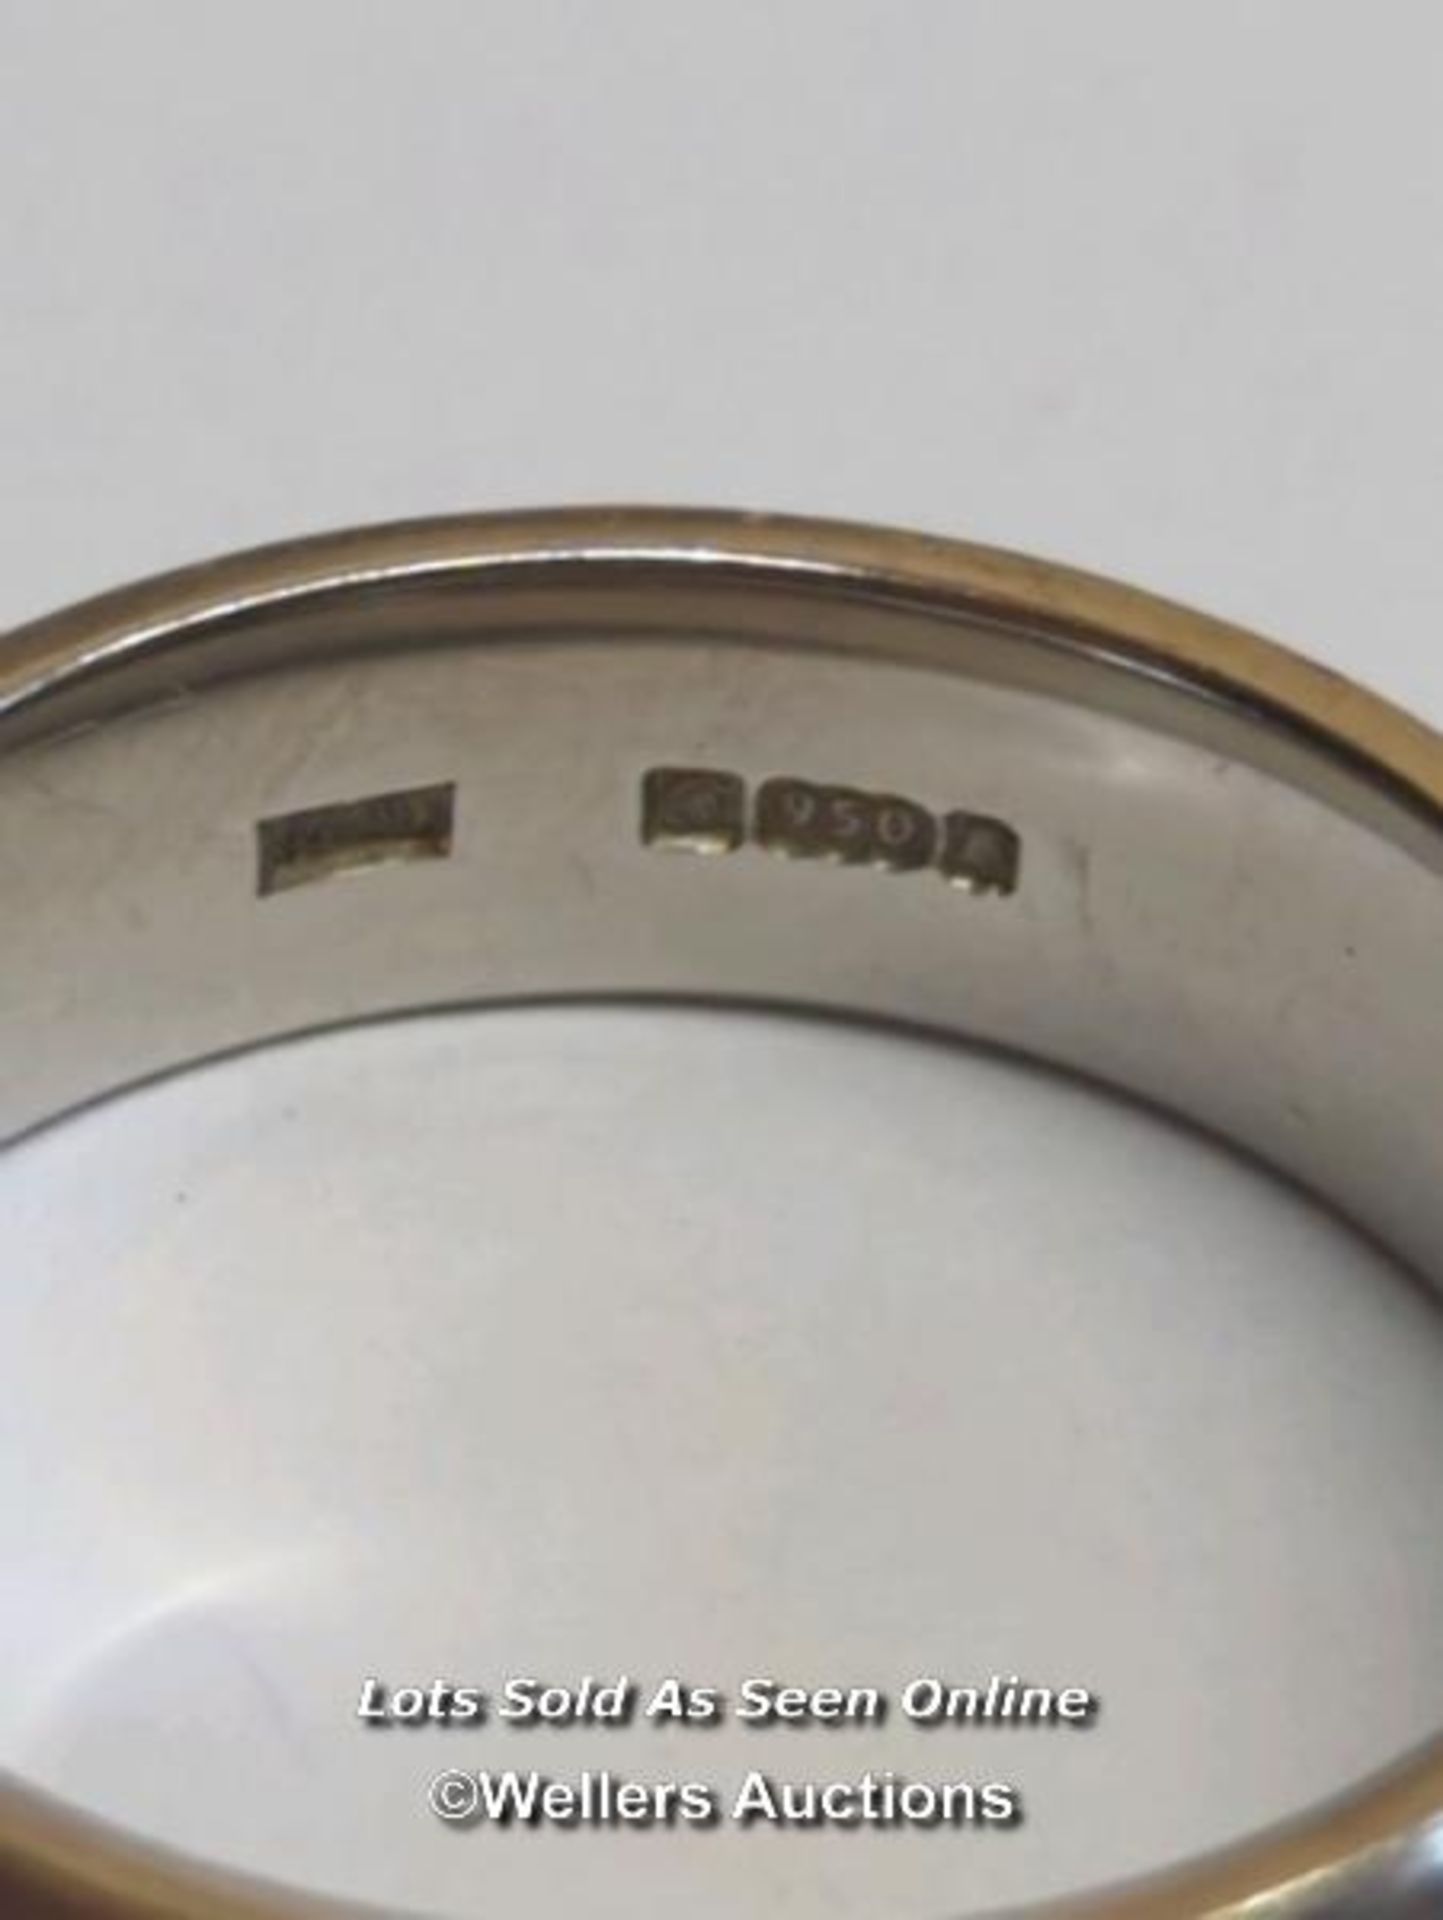 Palladium wedding ring, size Q, width 6mm, gross weight 7.35g / SF - Image 3 of 3